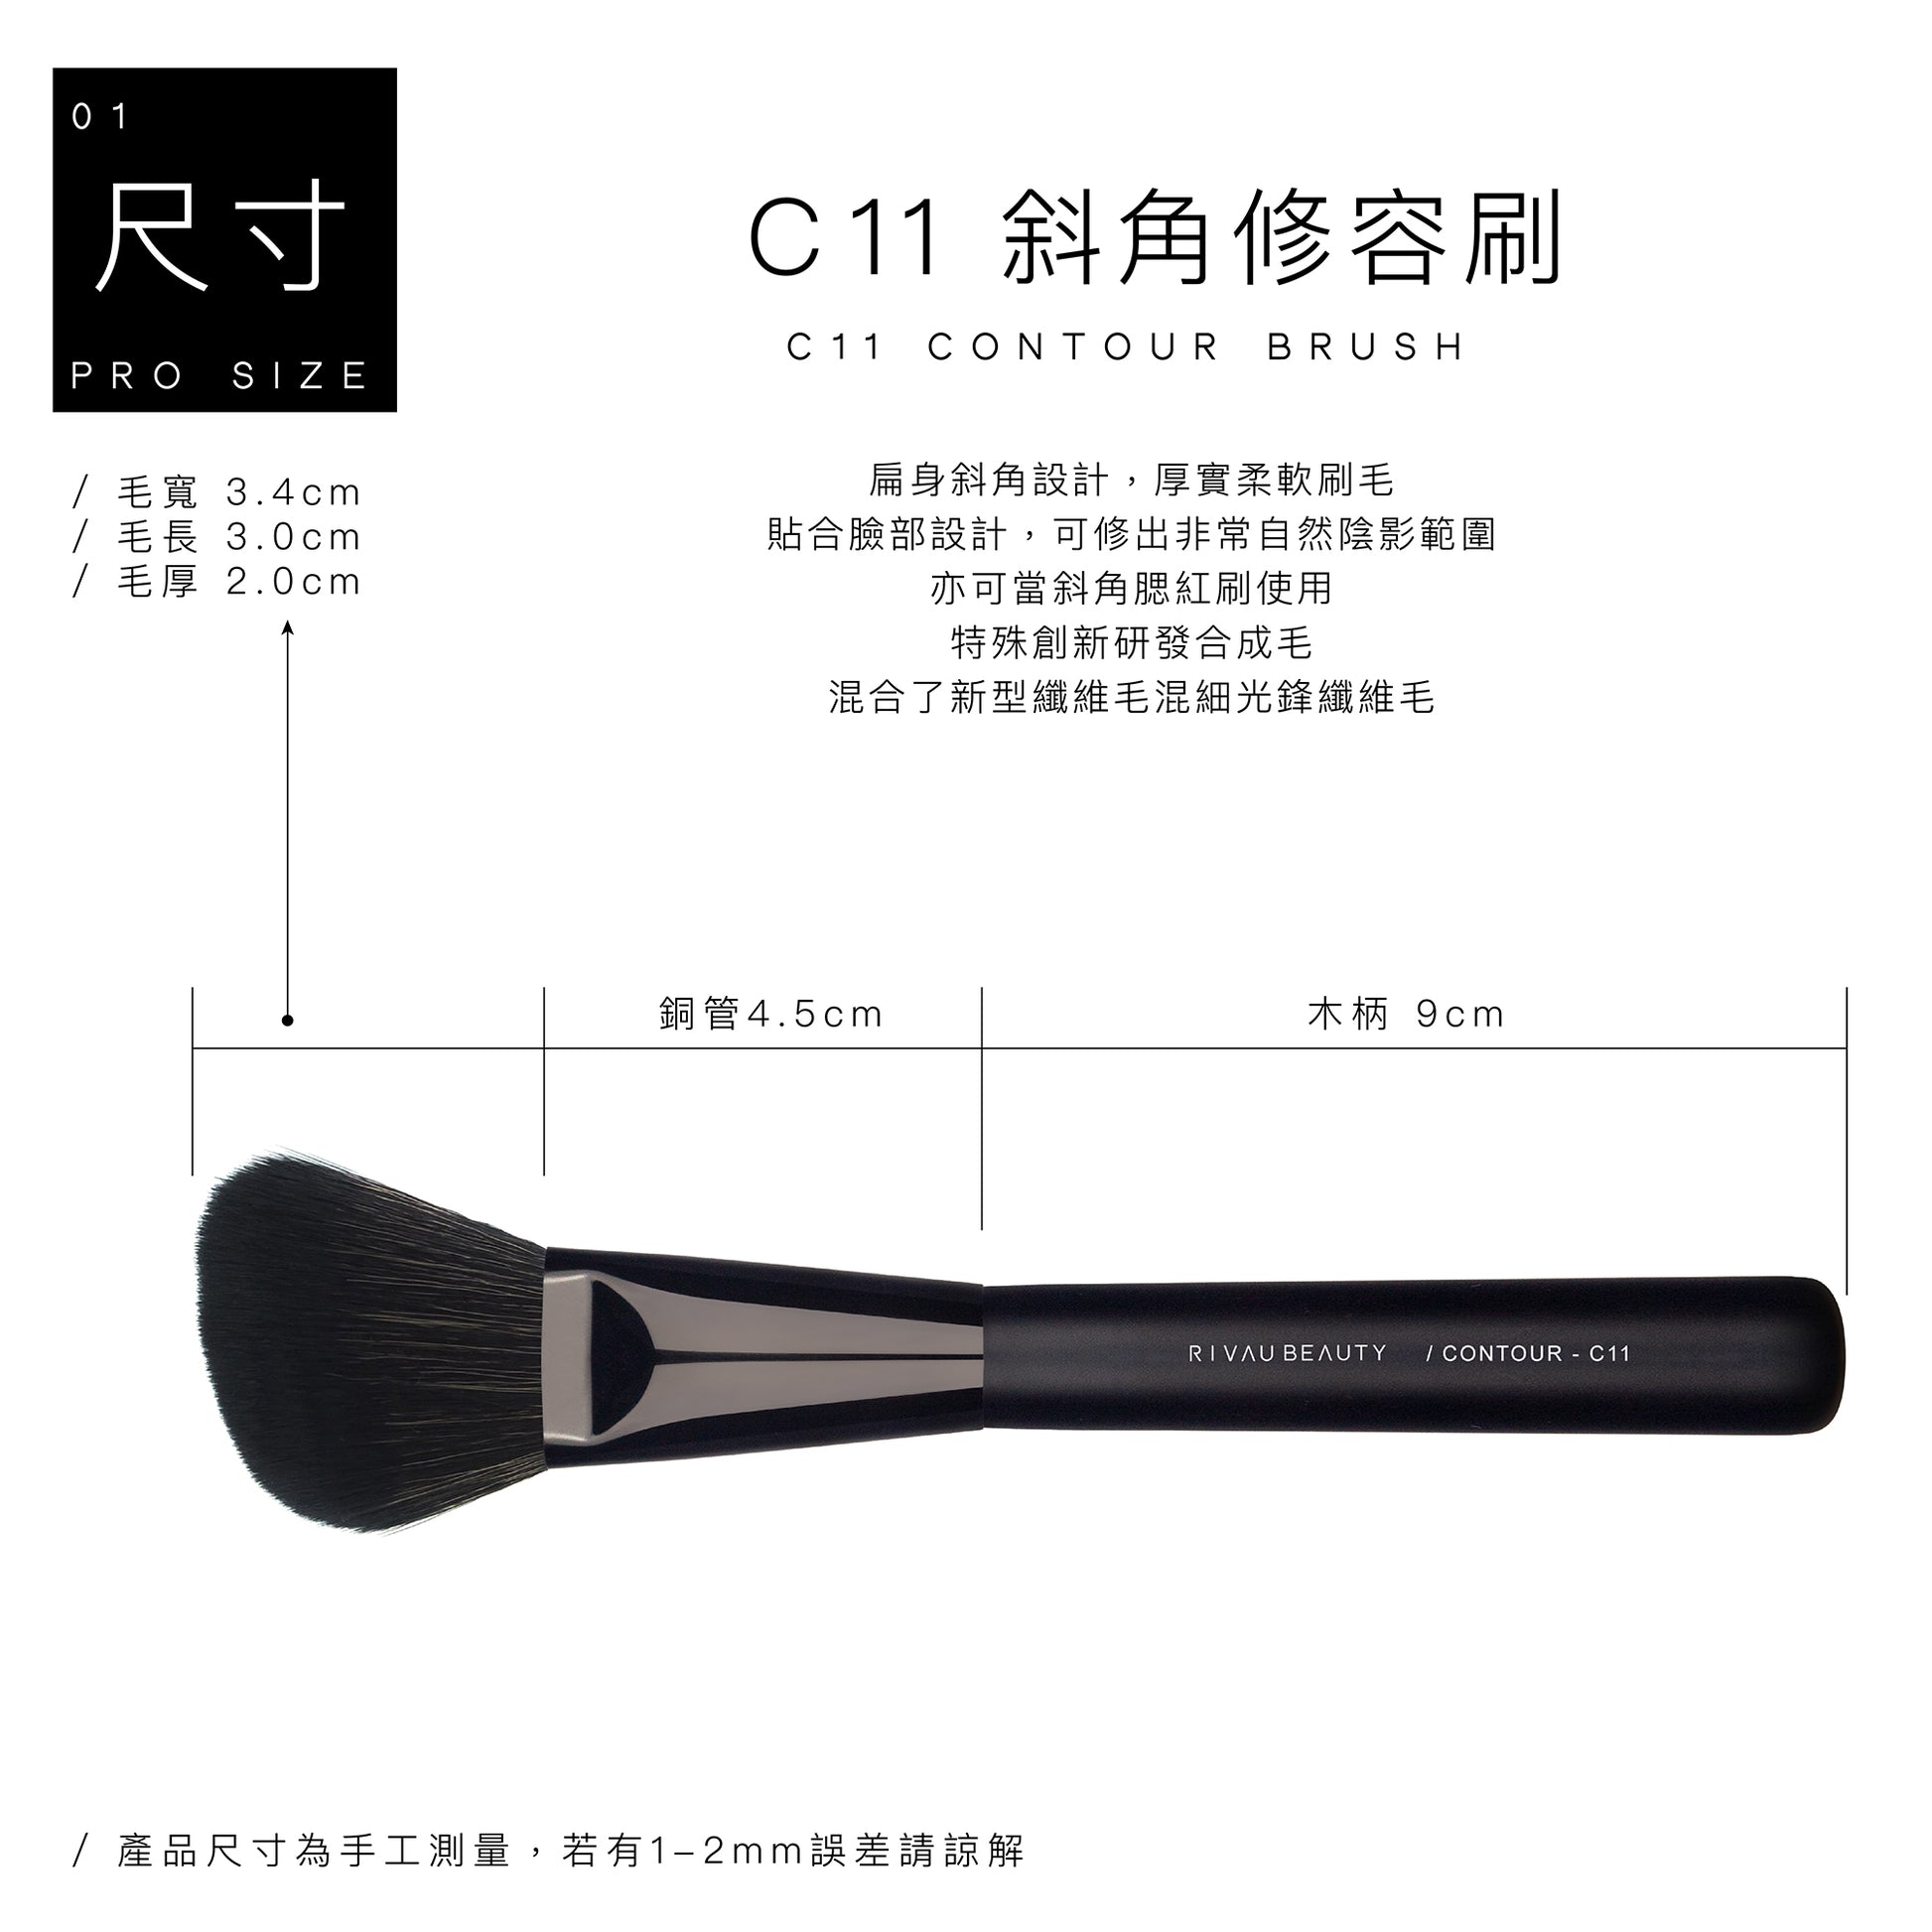 C11 斜角修容刷 - 黑色系列 C11 Contour Brush